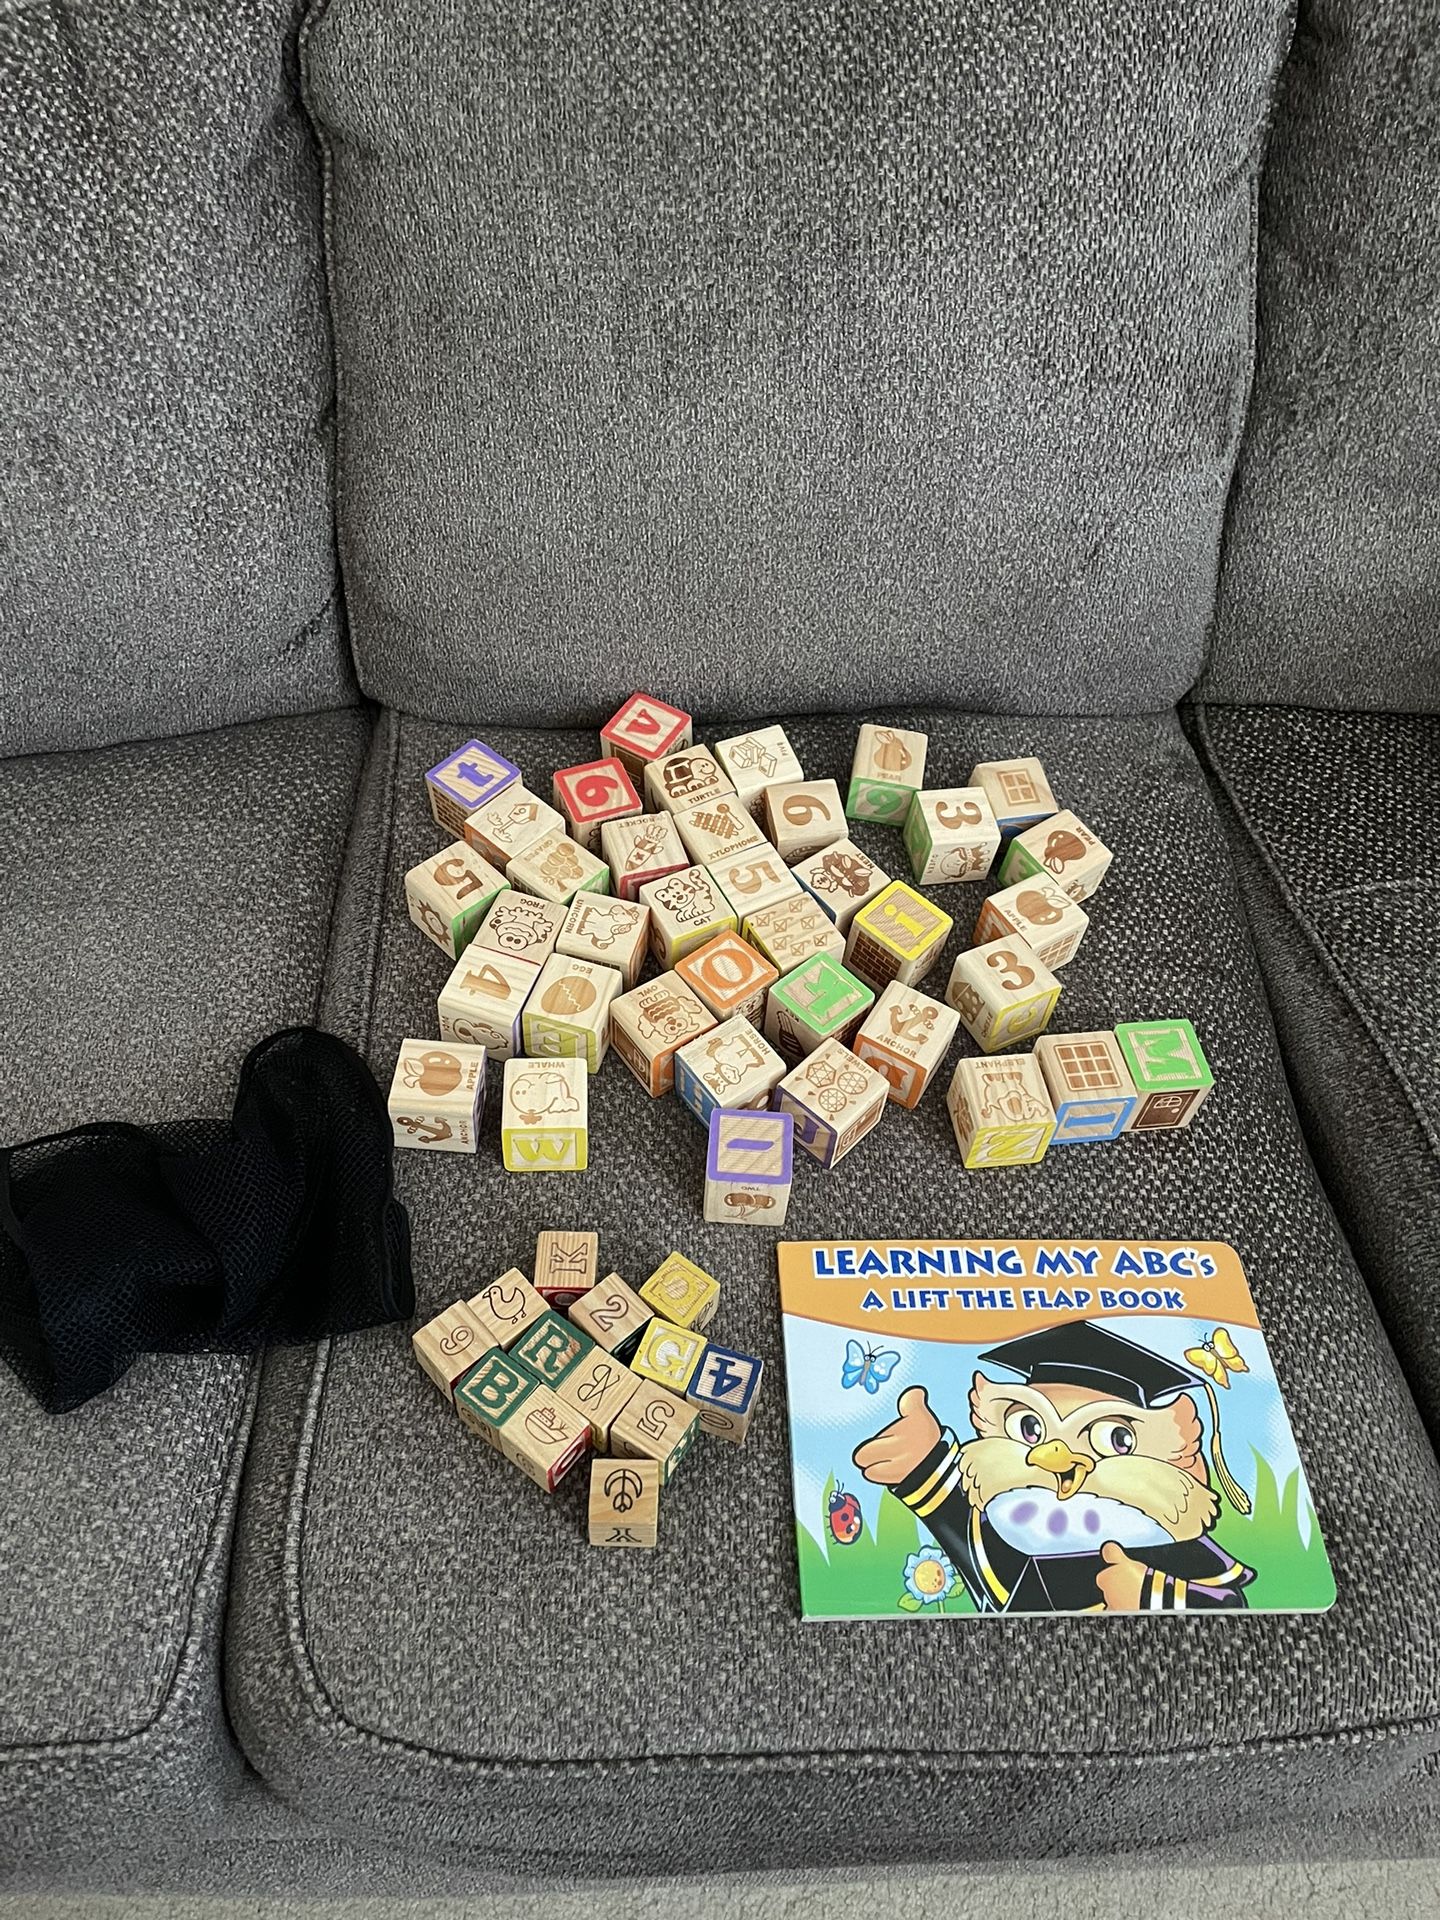 Wooden Blocks bundle (53) with board book toy bundle